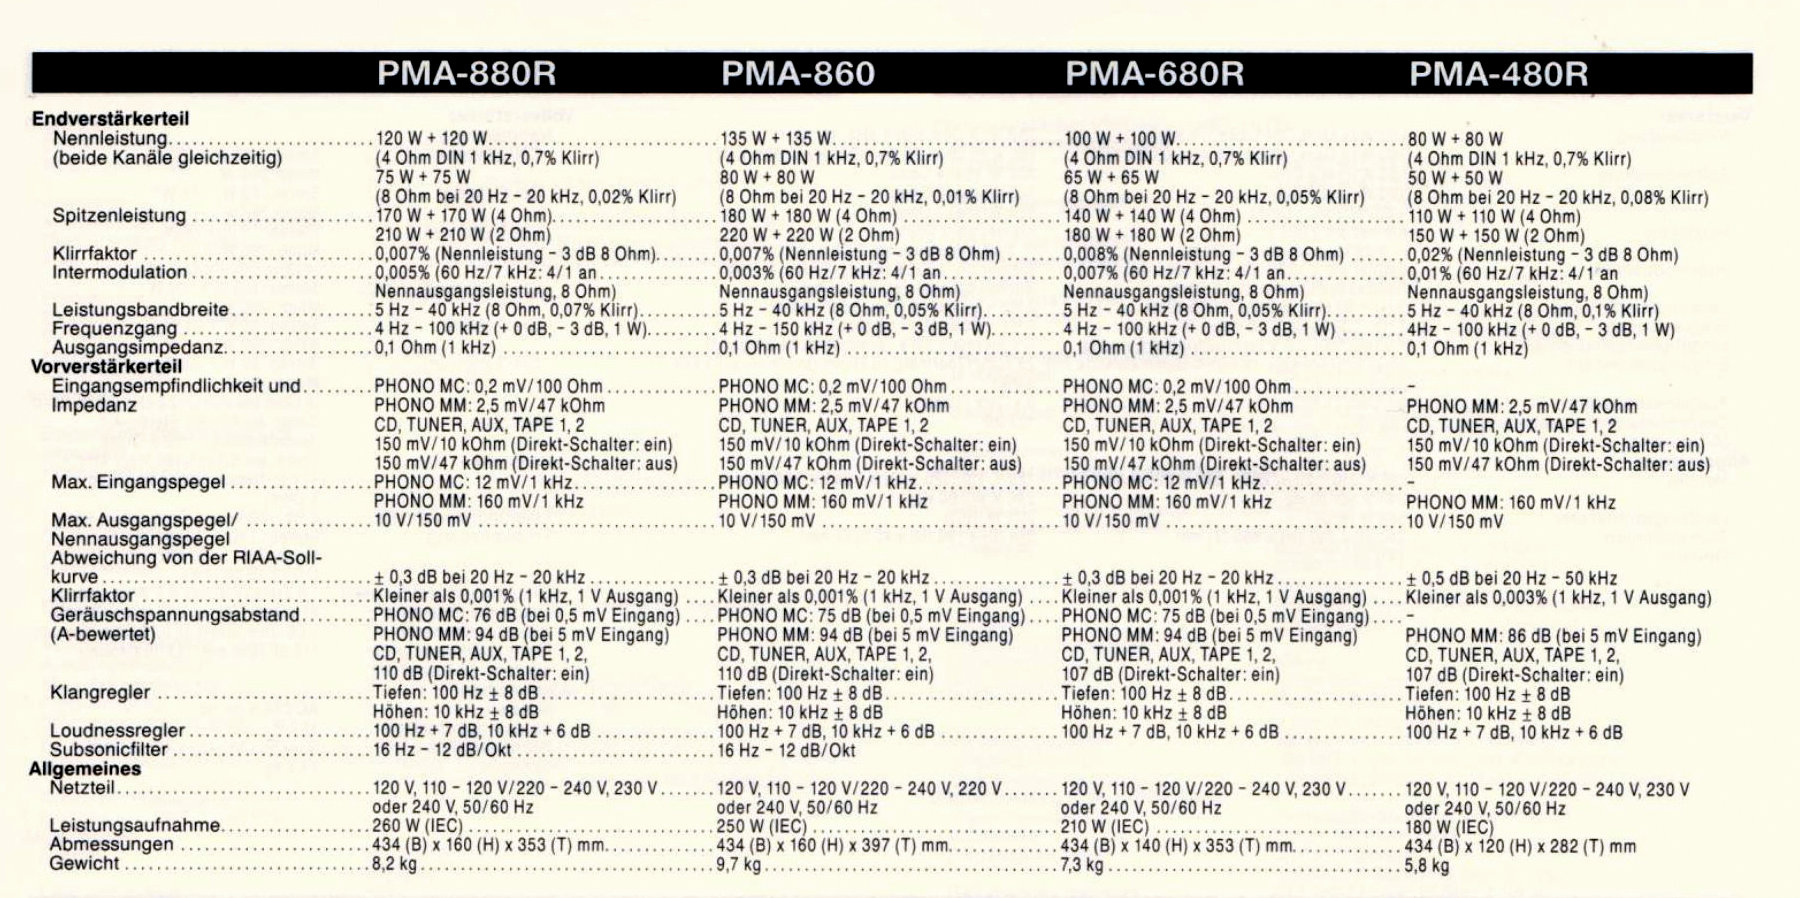 Denon PMA-480 R-680 R-860-880 R-Daten-1992.jpg